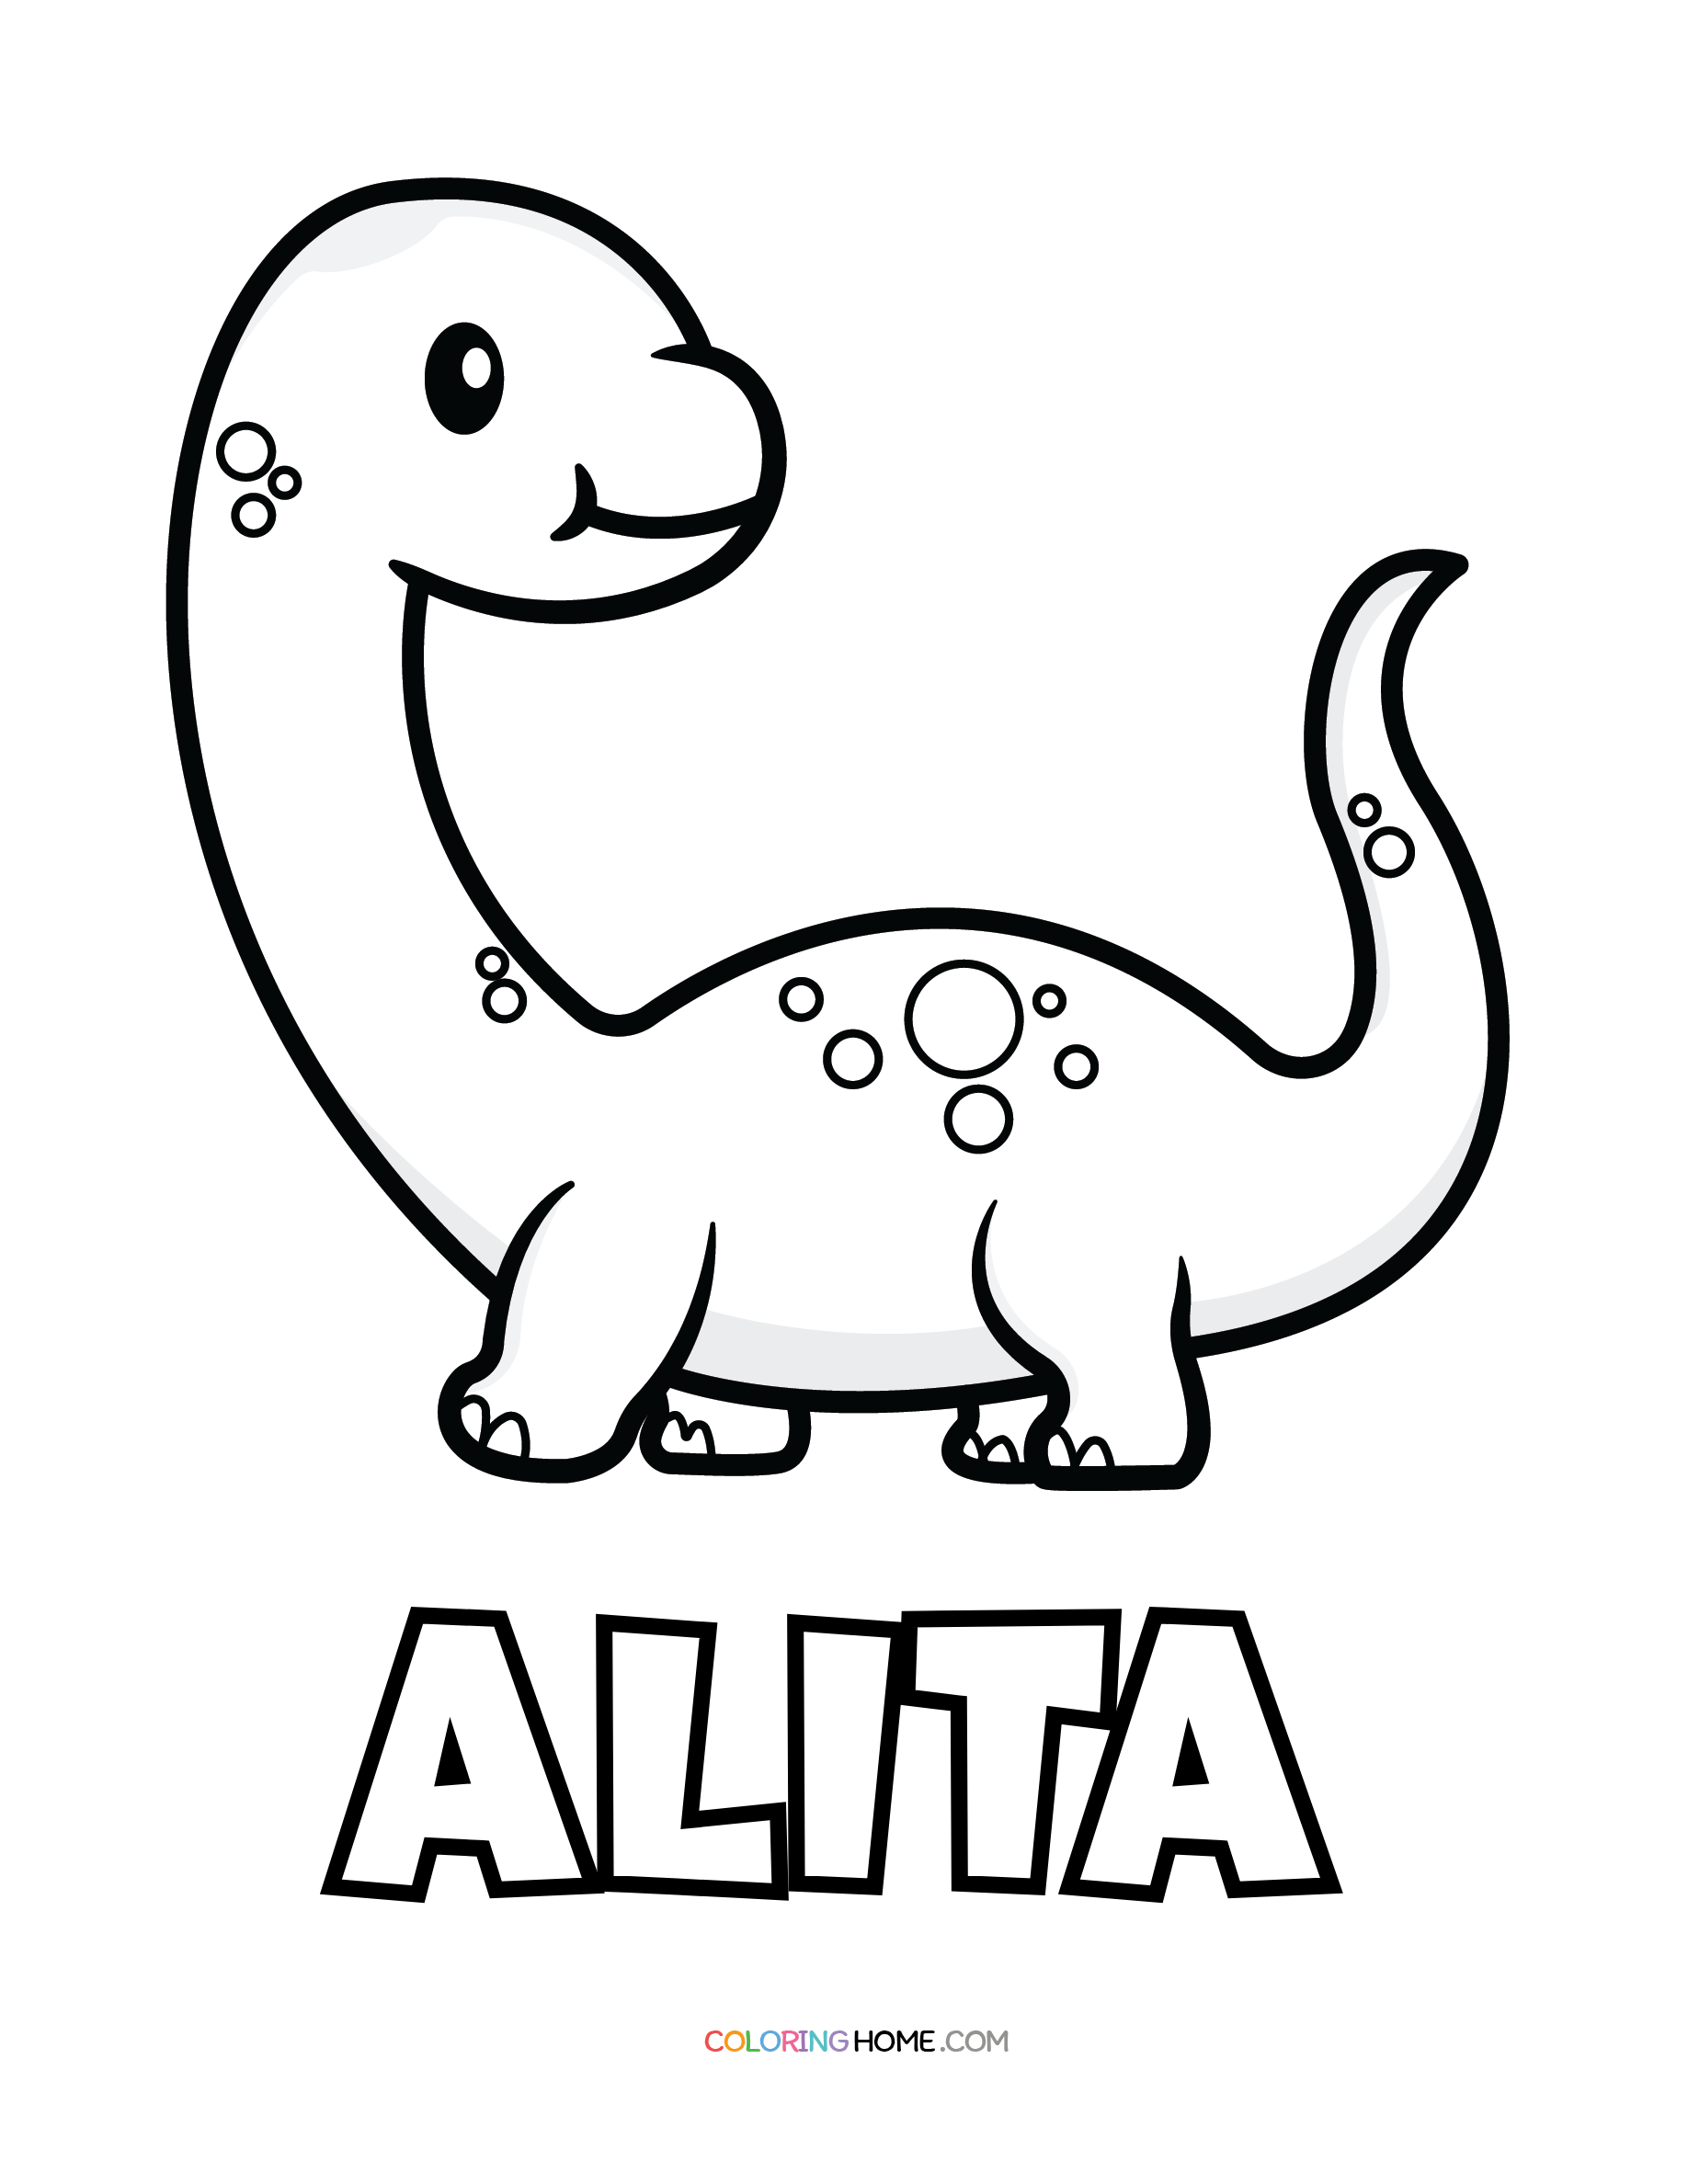 Alita dinosaur coloring page